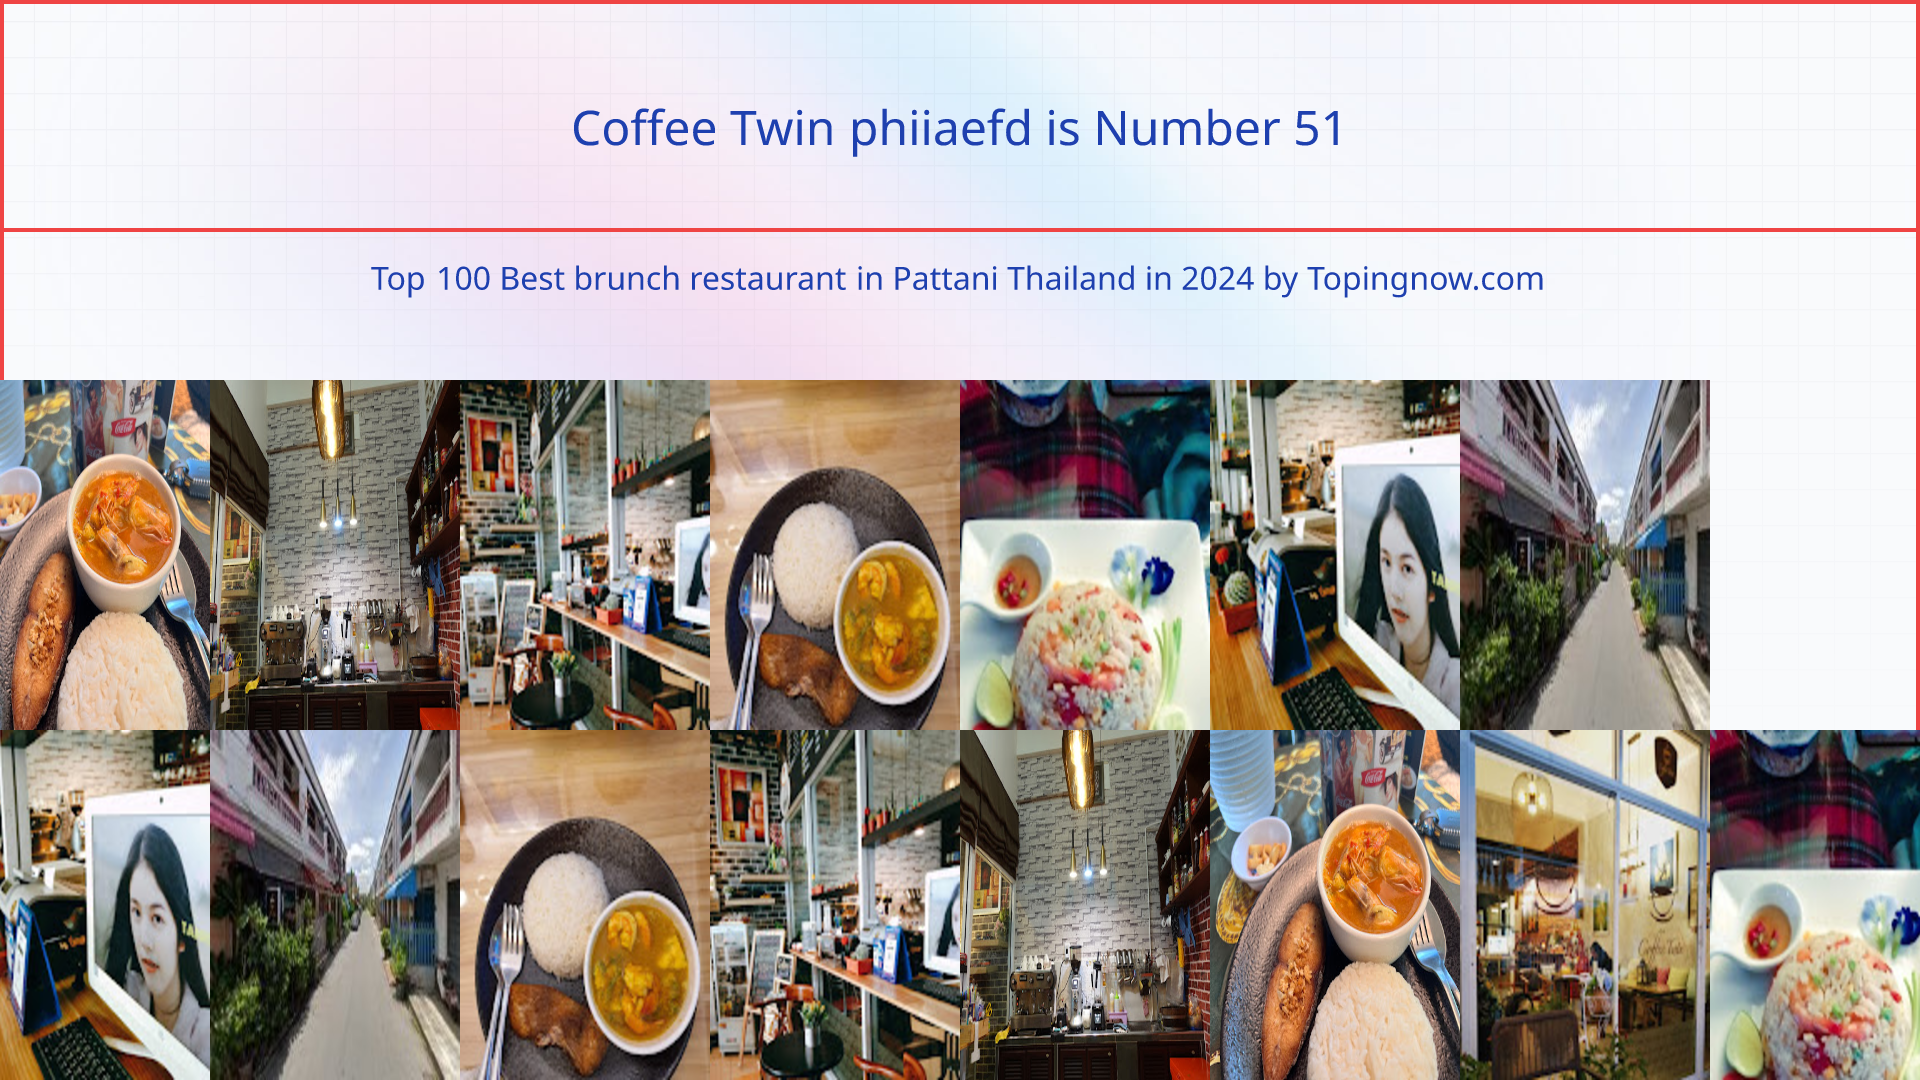 Coffee Twin phiiaefd: Top 100 Best brunch restaurant in Pattani Thailand in 2024